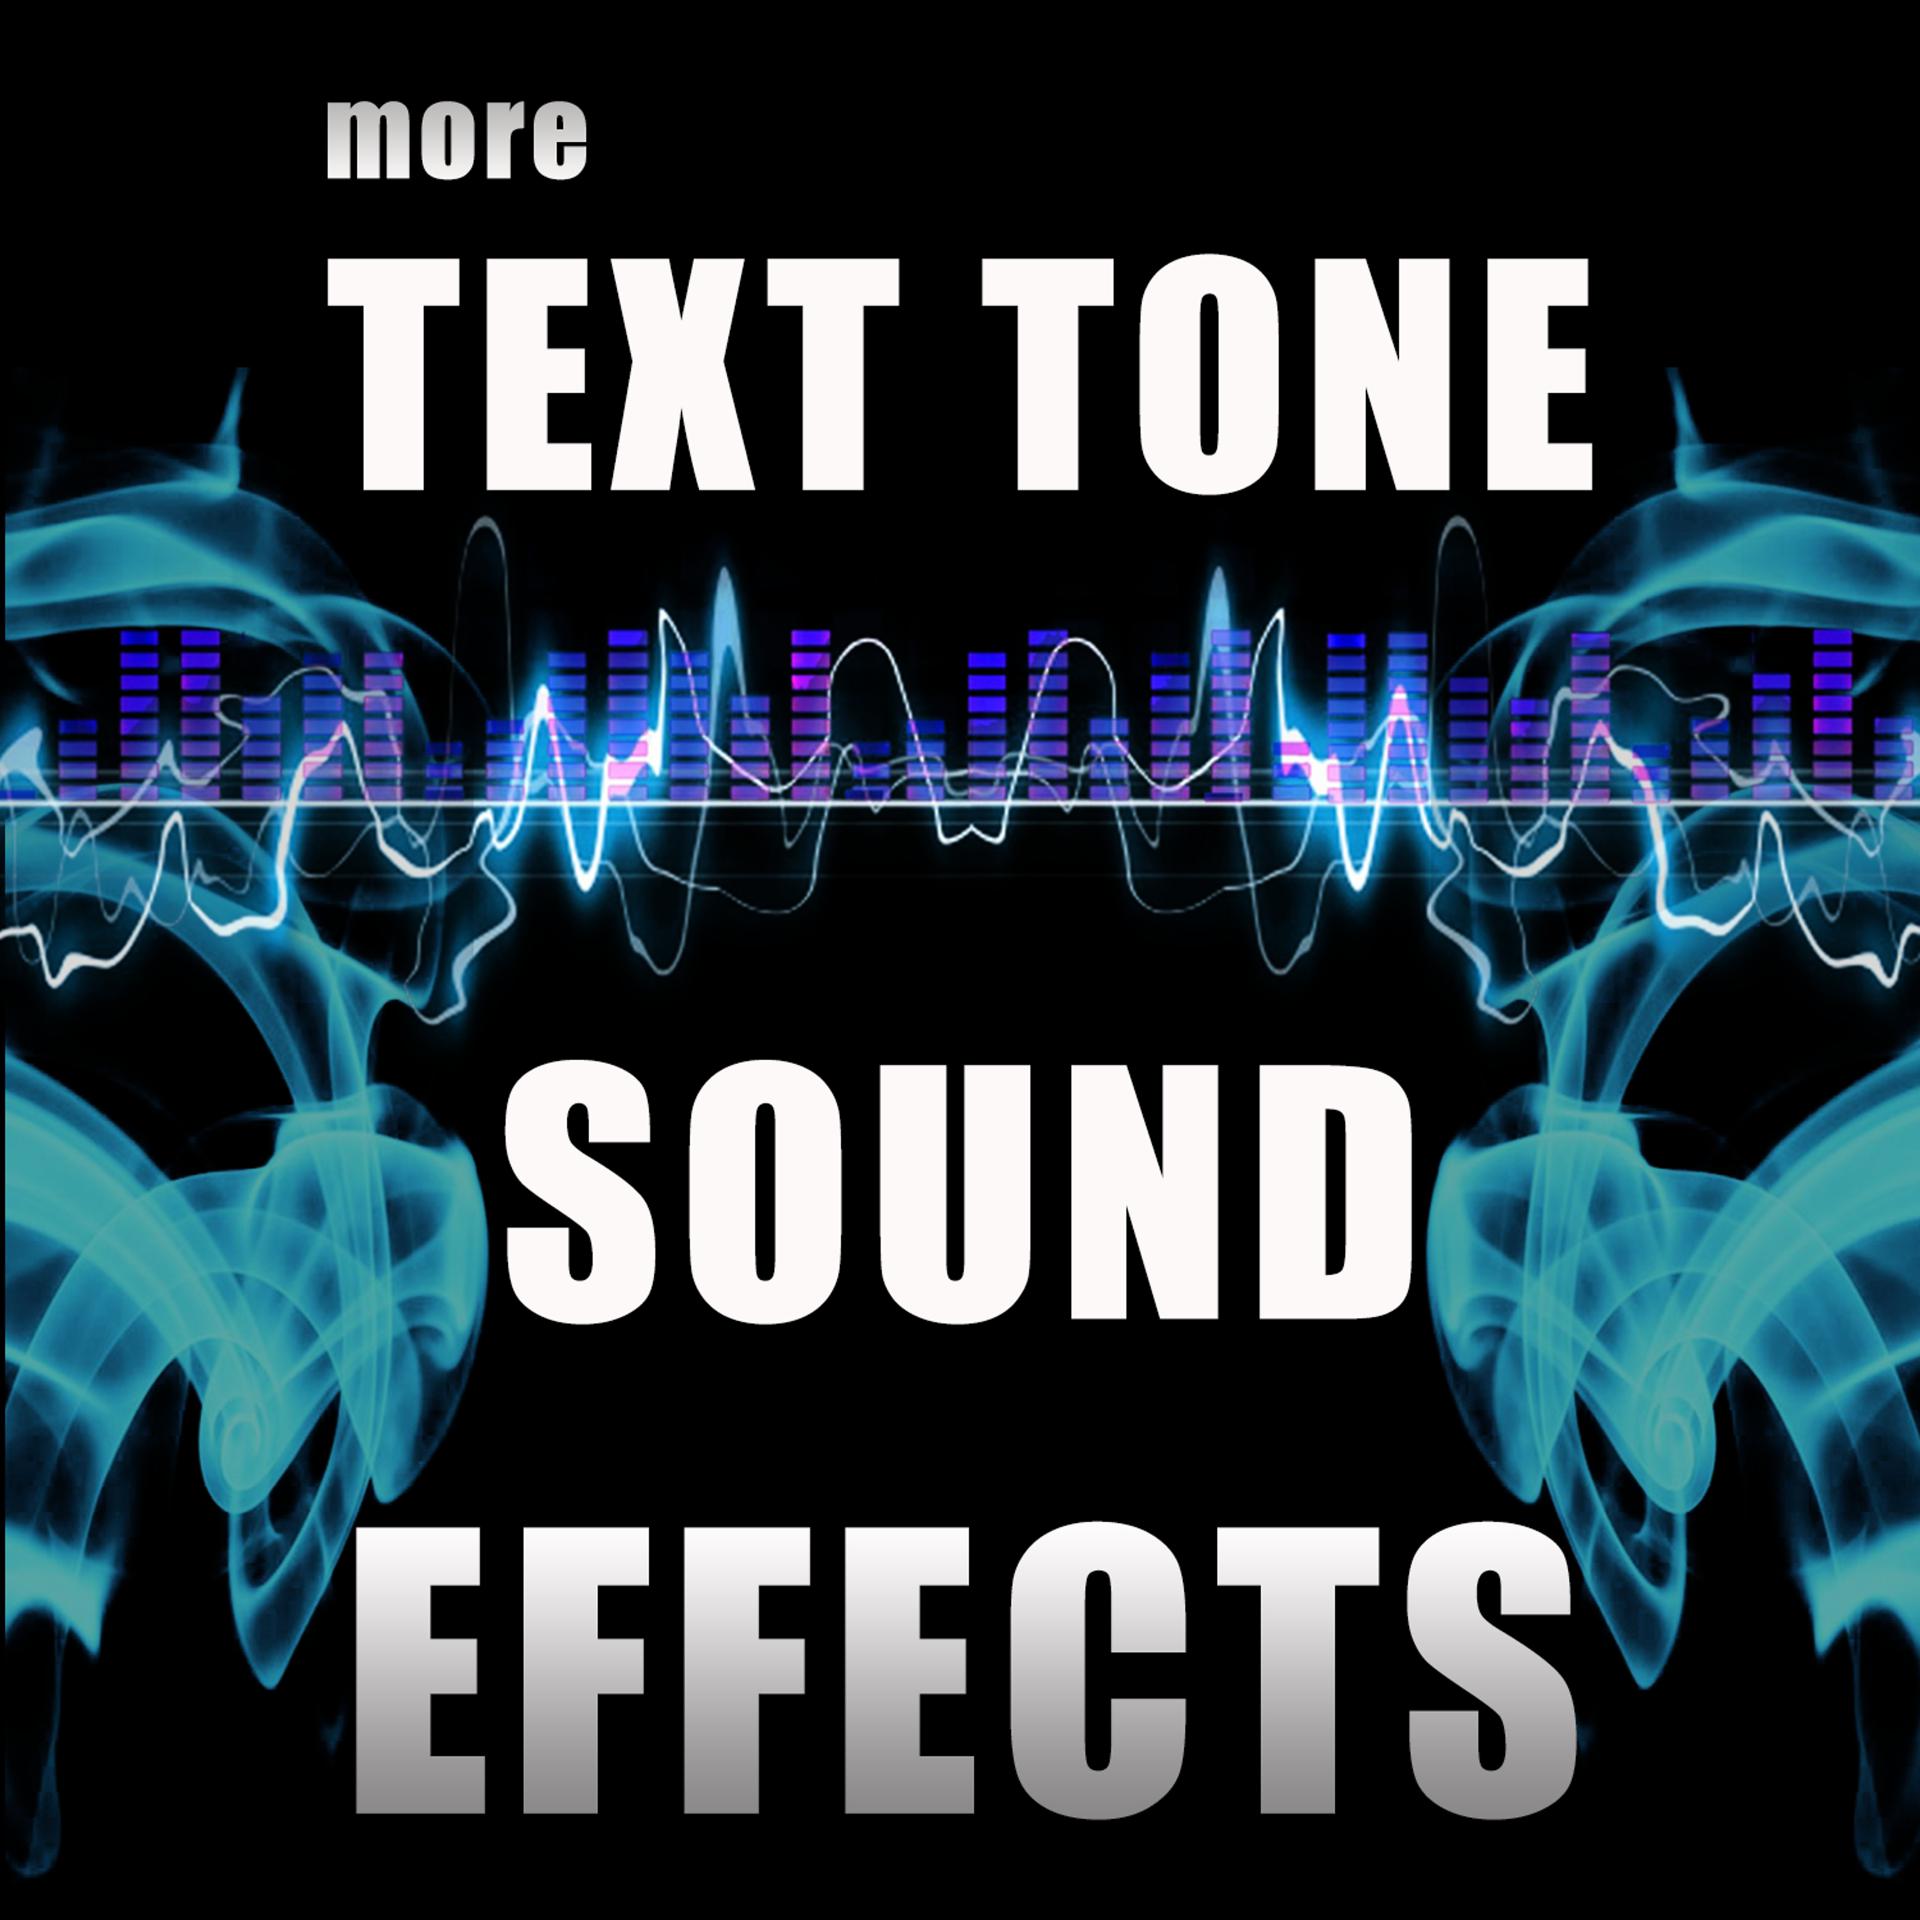 Sound tone